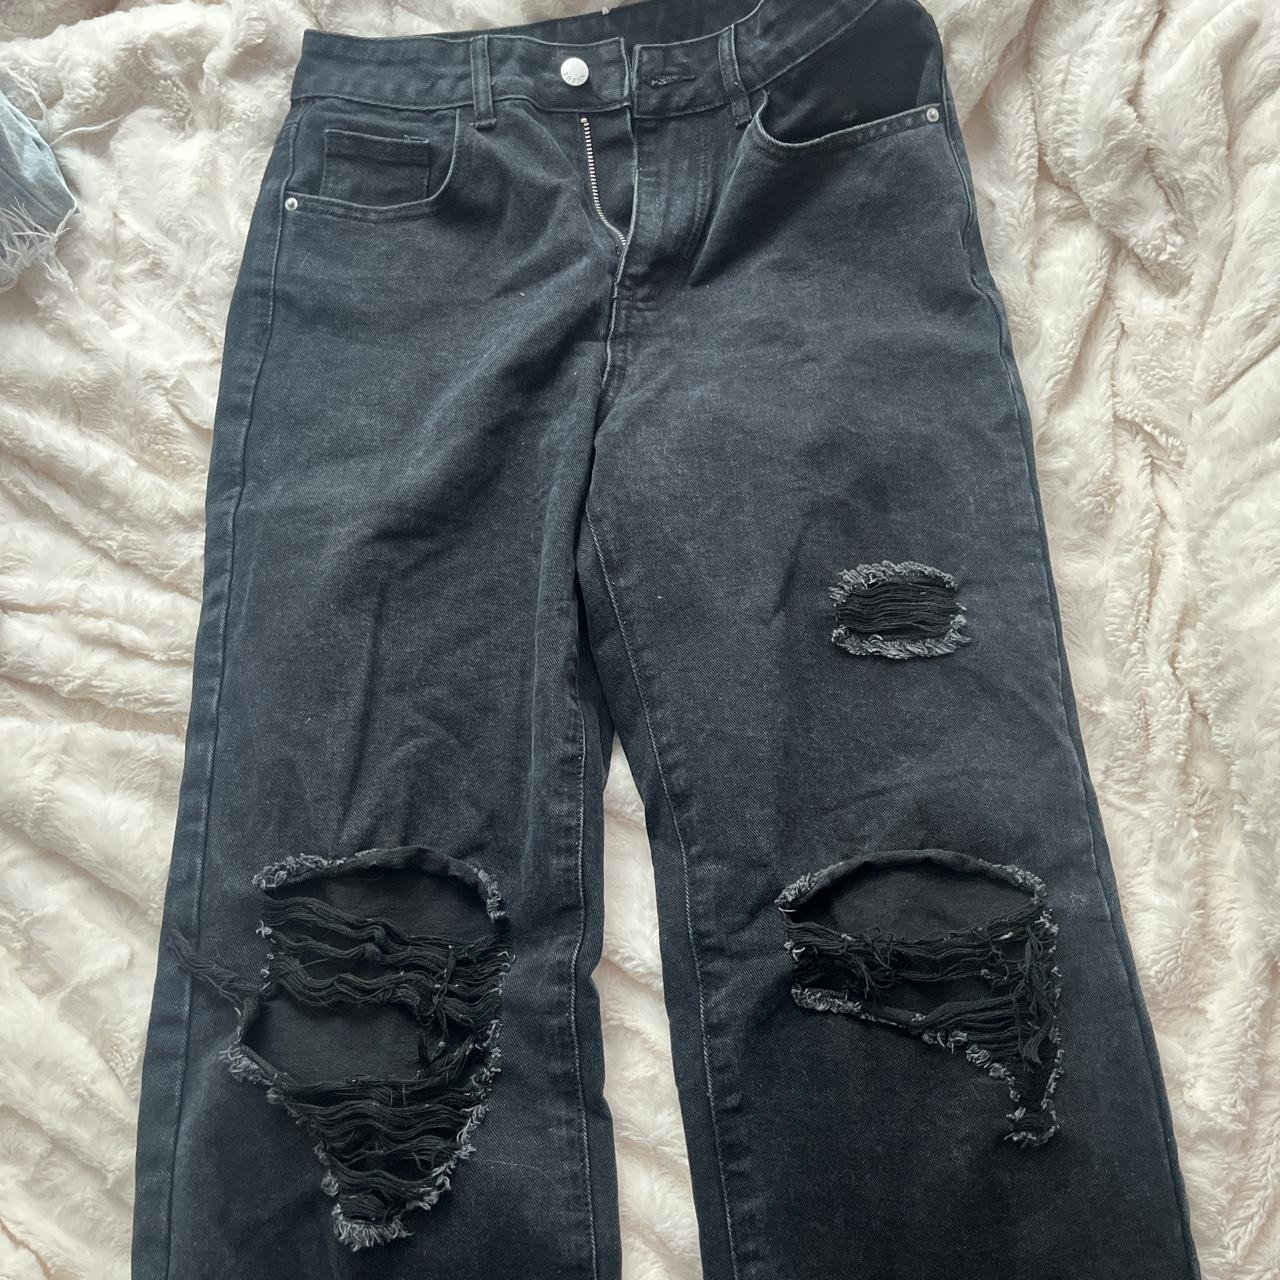 Ripped black cargo pants - Depop